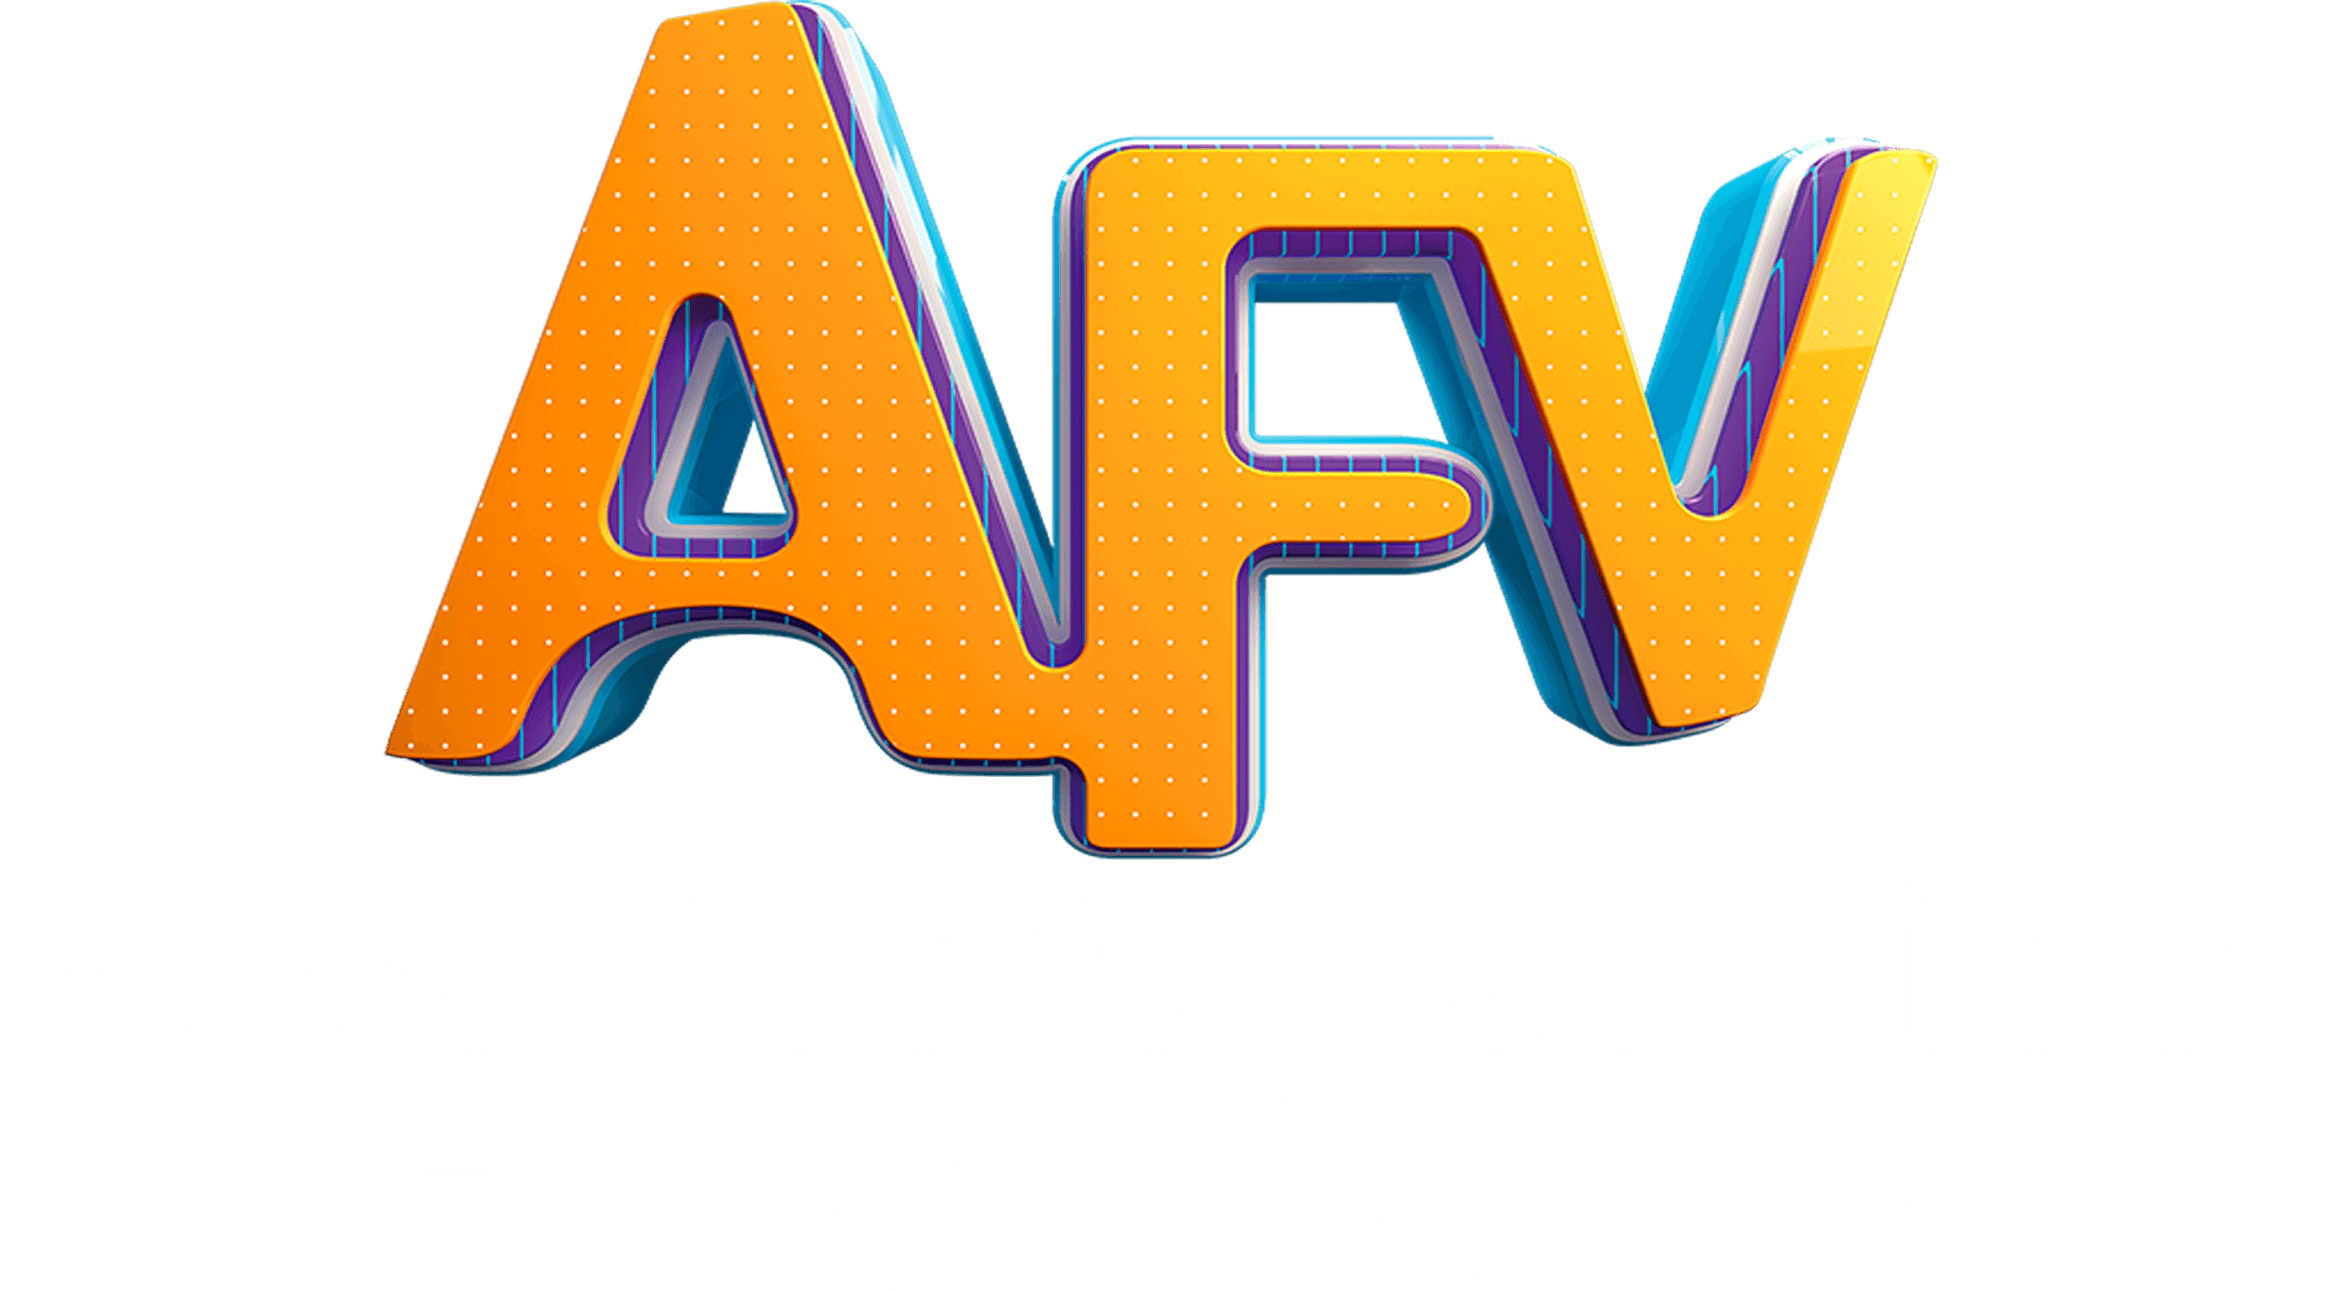 America's Funniest Home Videos logo